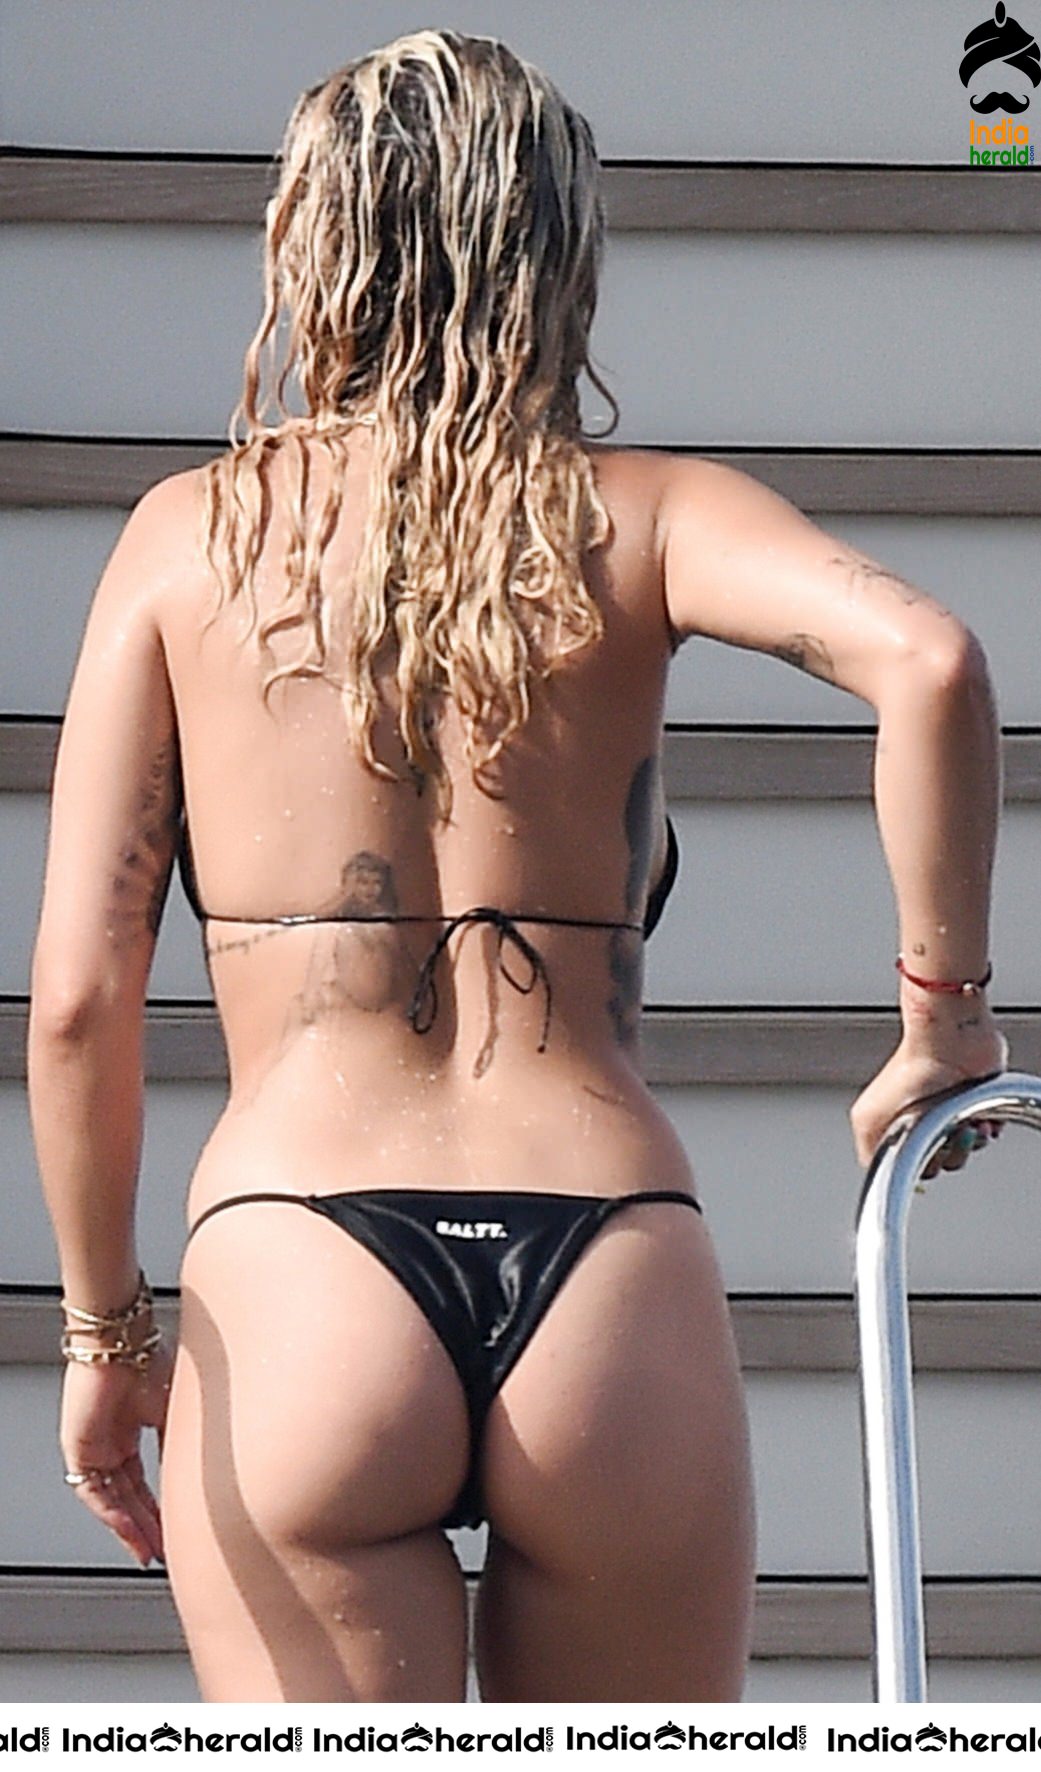 Rita Ora in Bikini enjoys at a Beach in Studio City